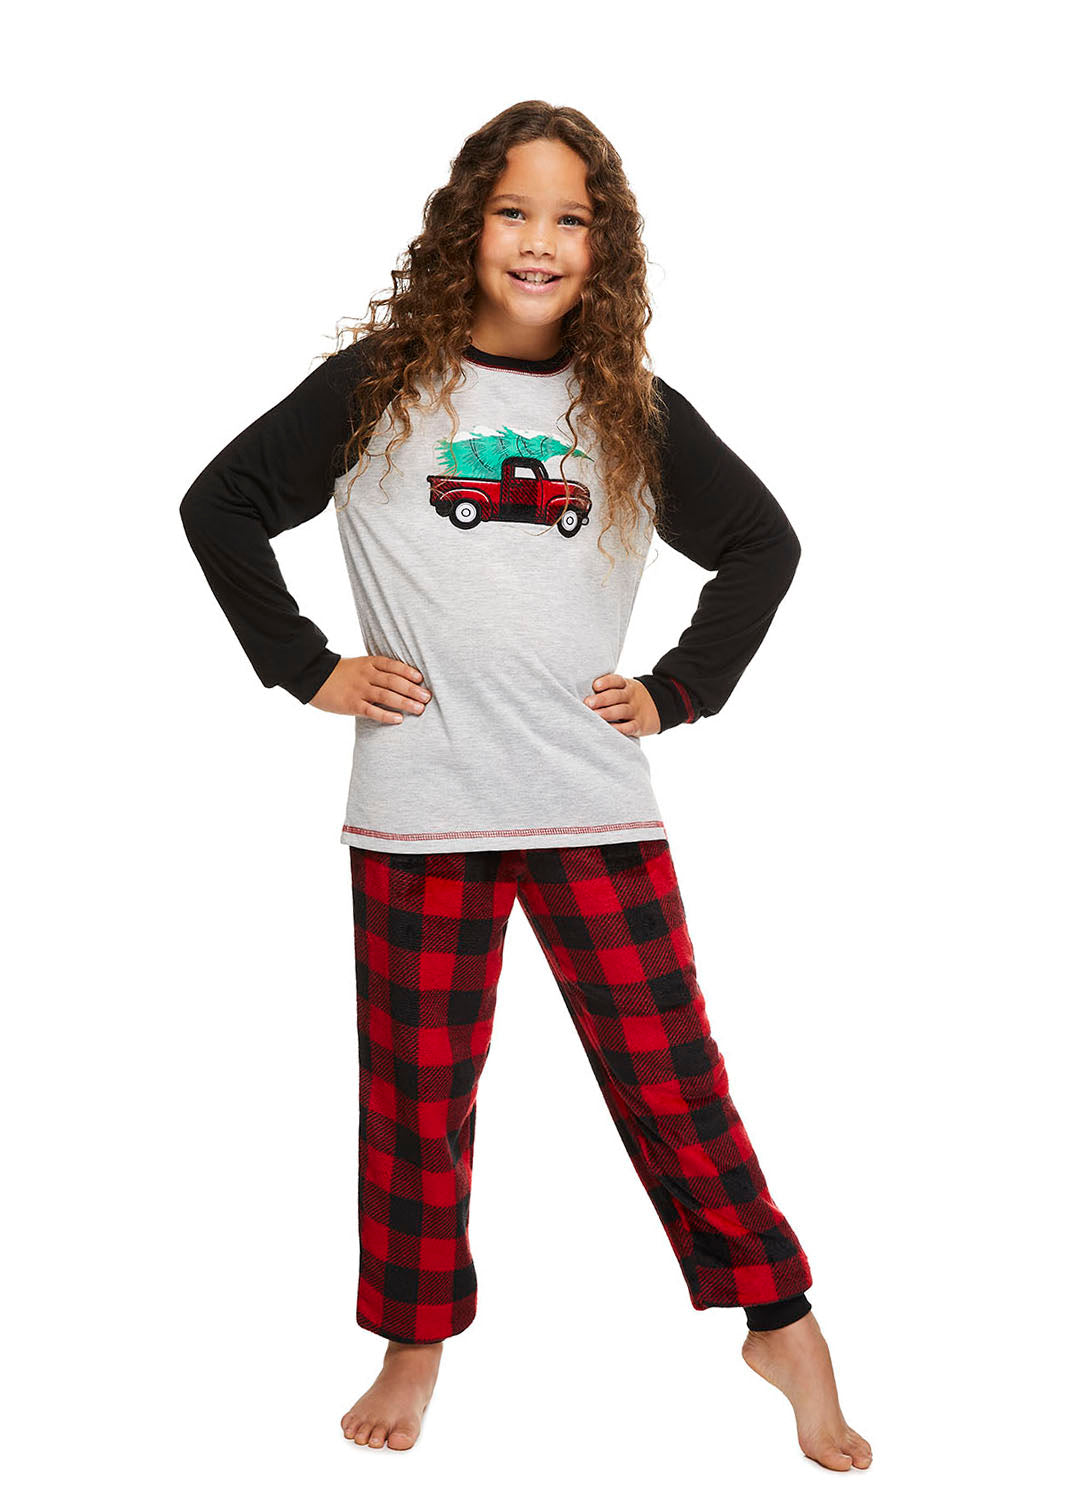 Fun Girl wearing Red Truck Pajama Set